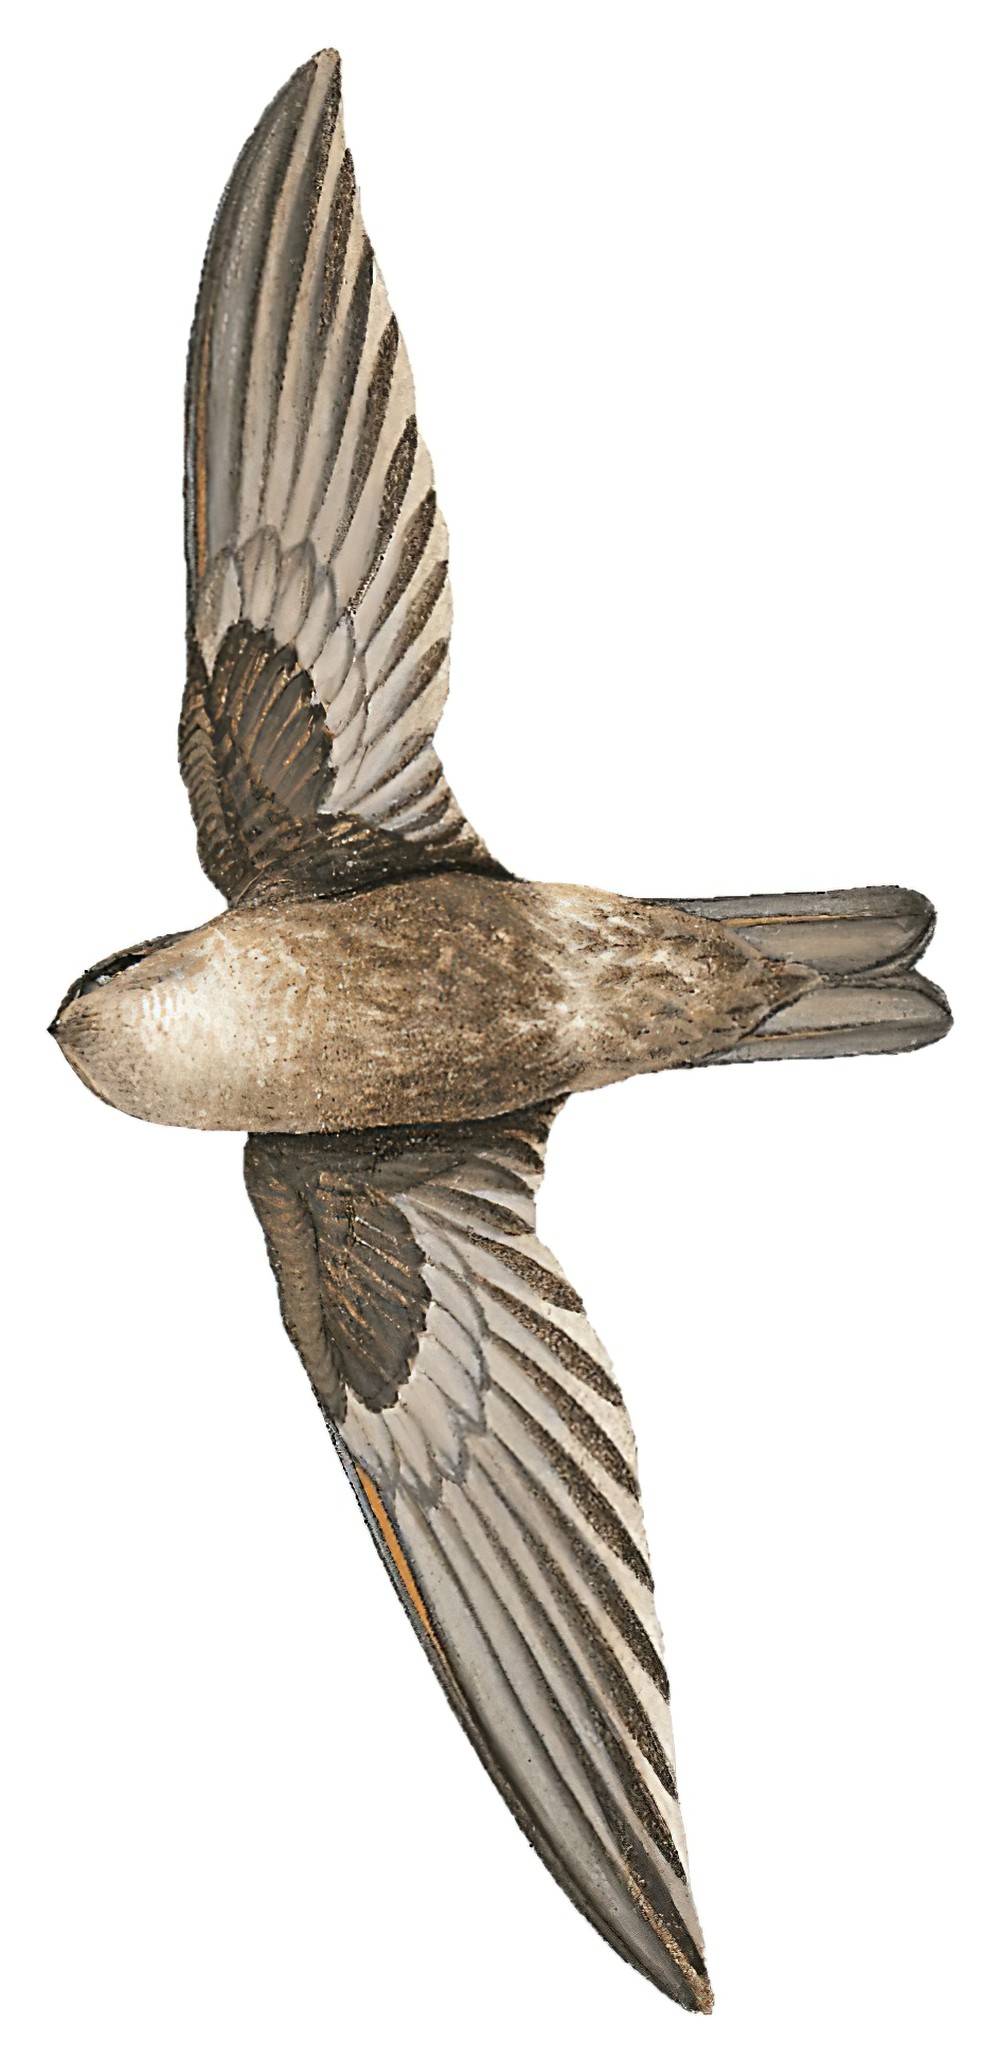 White-nest Swiftlet / Aerodramus fuciphagus